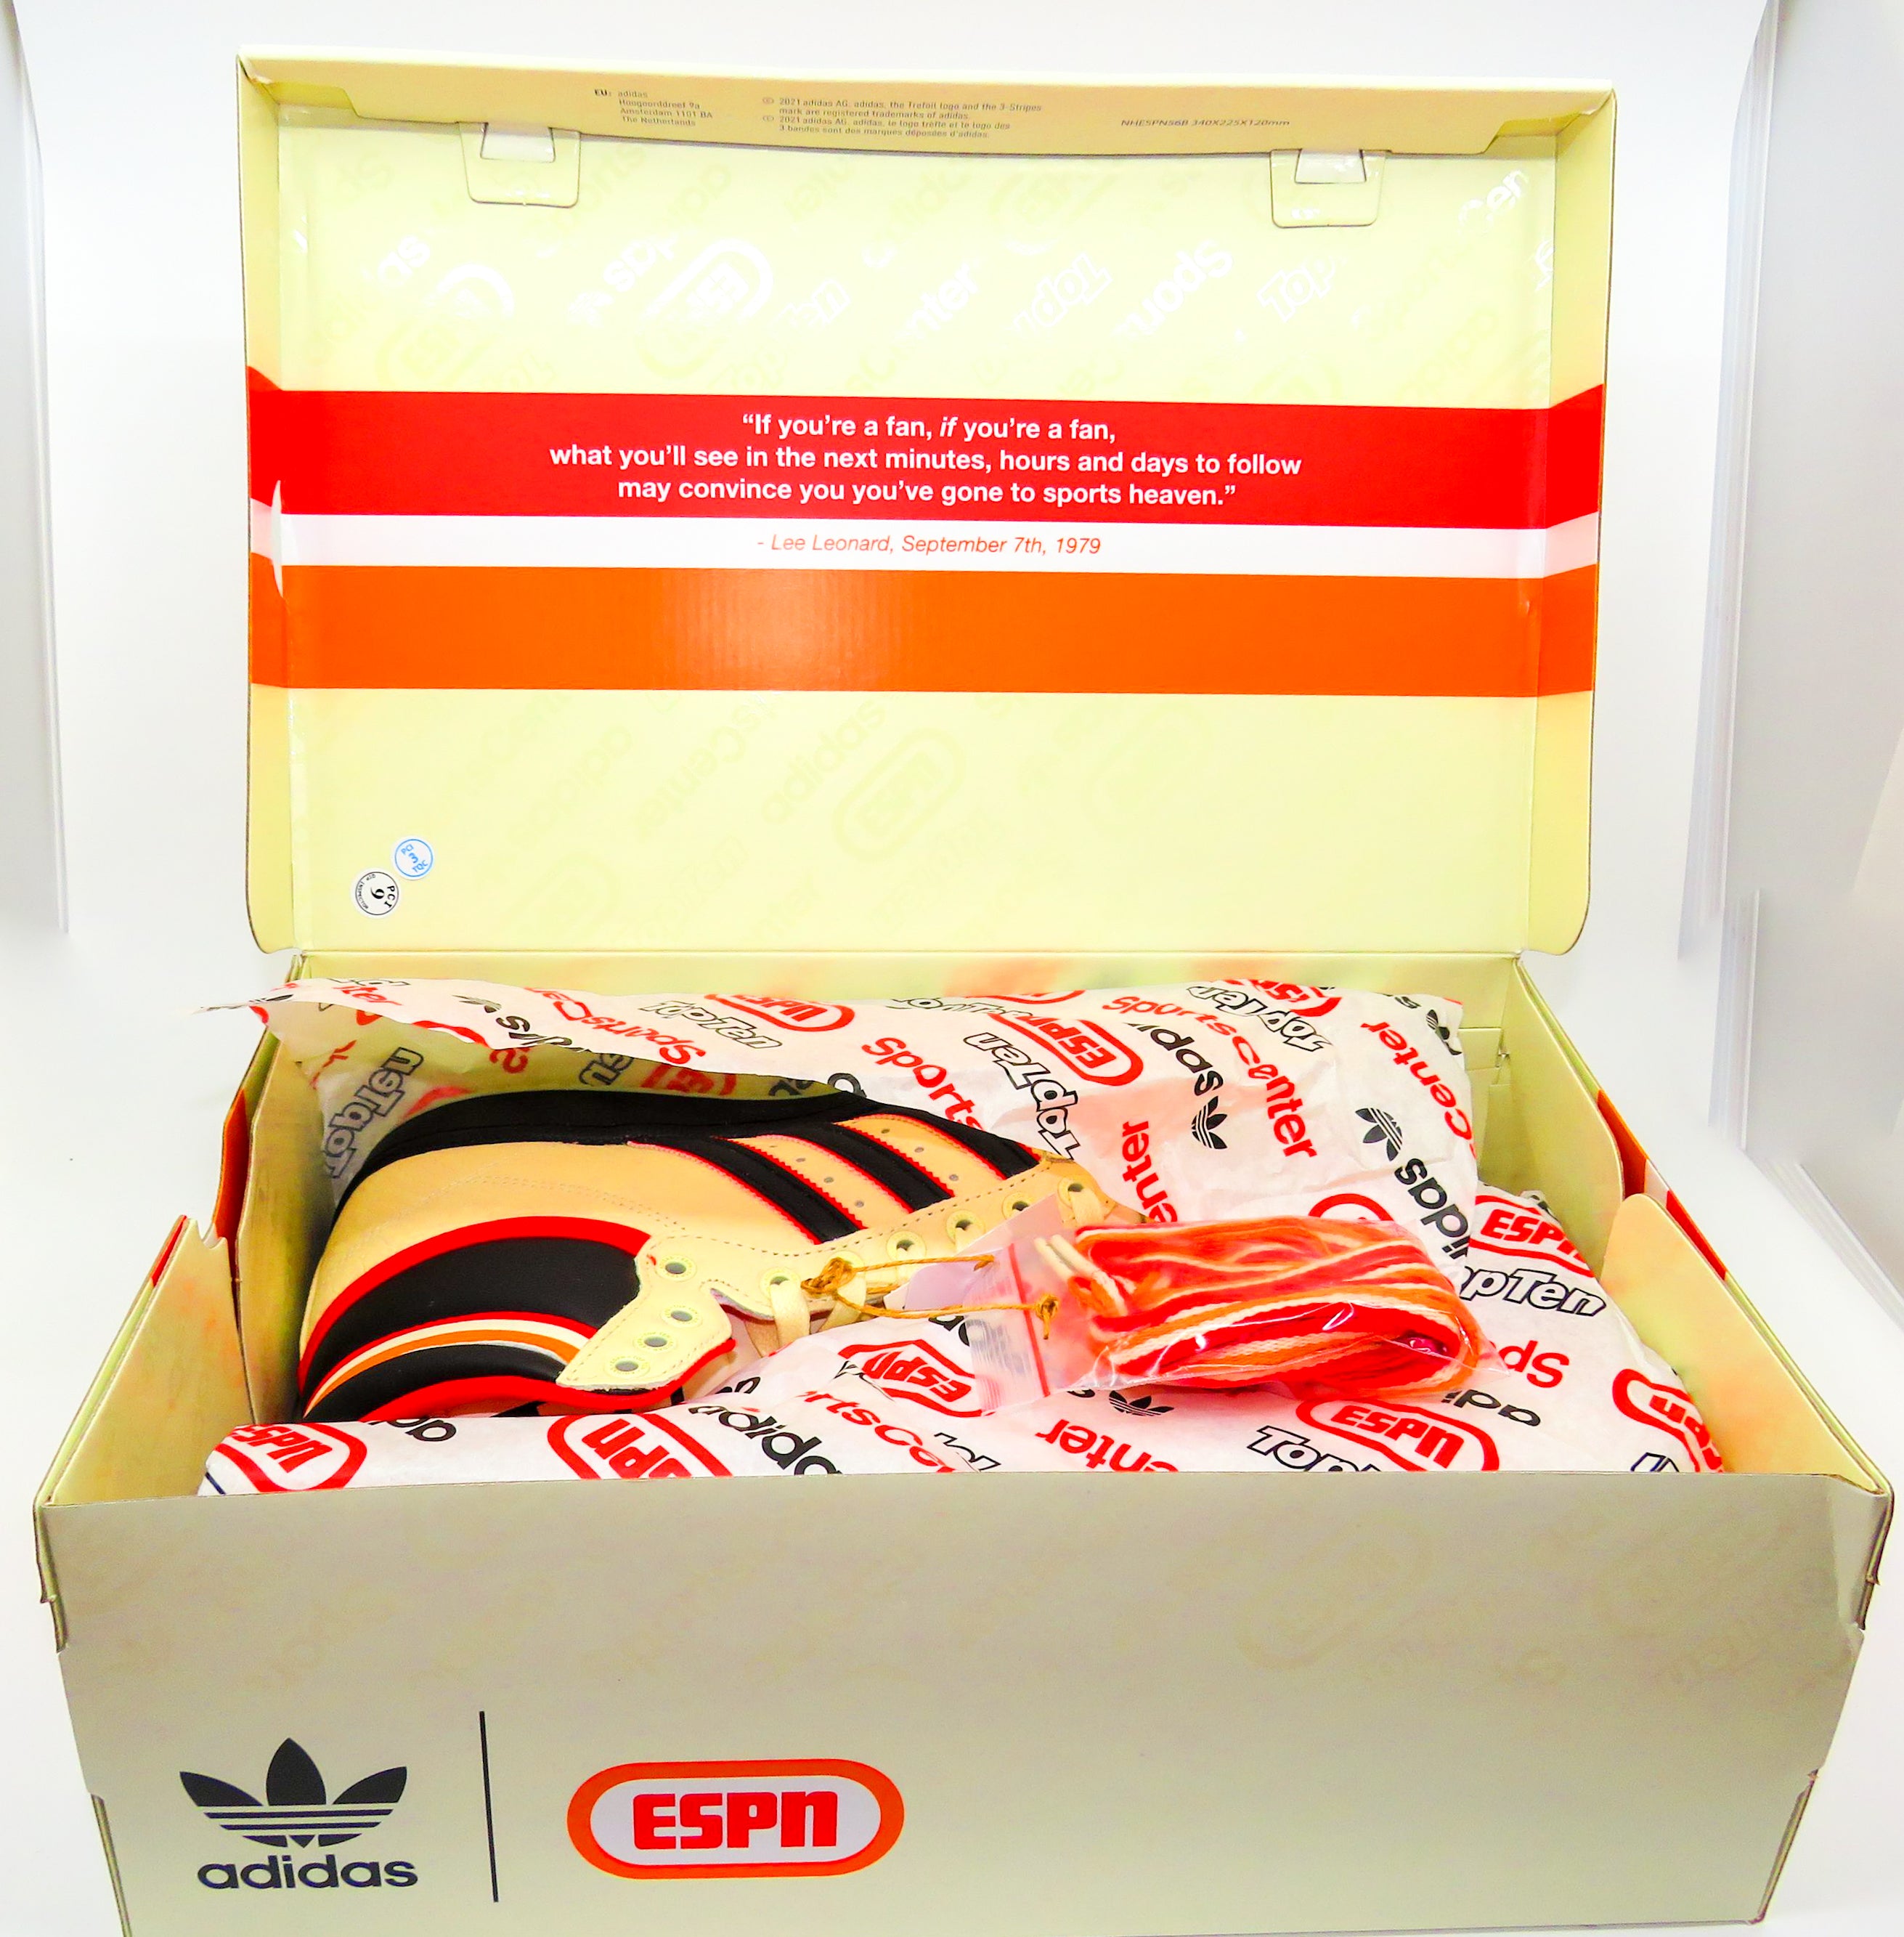 EPSN SportsCenter x adidas Top Ten Hi: Release Date, Price